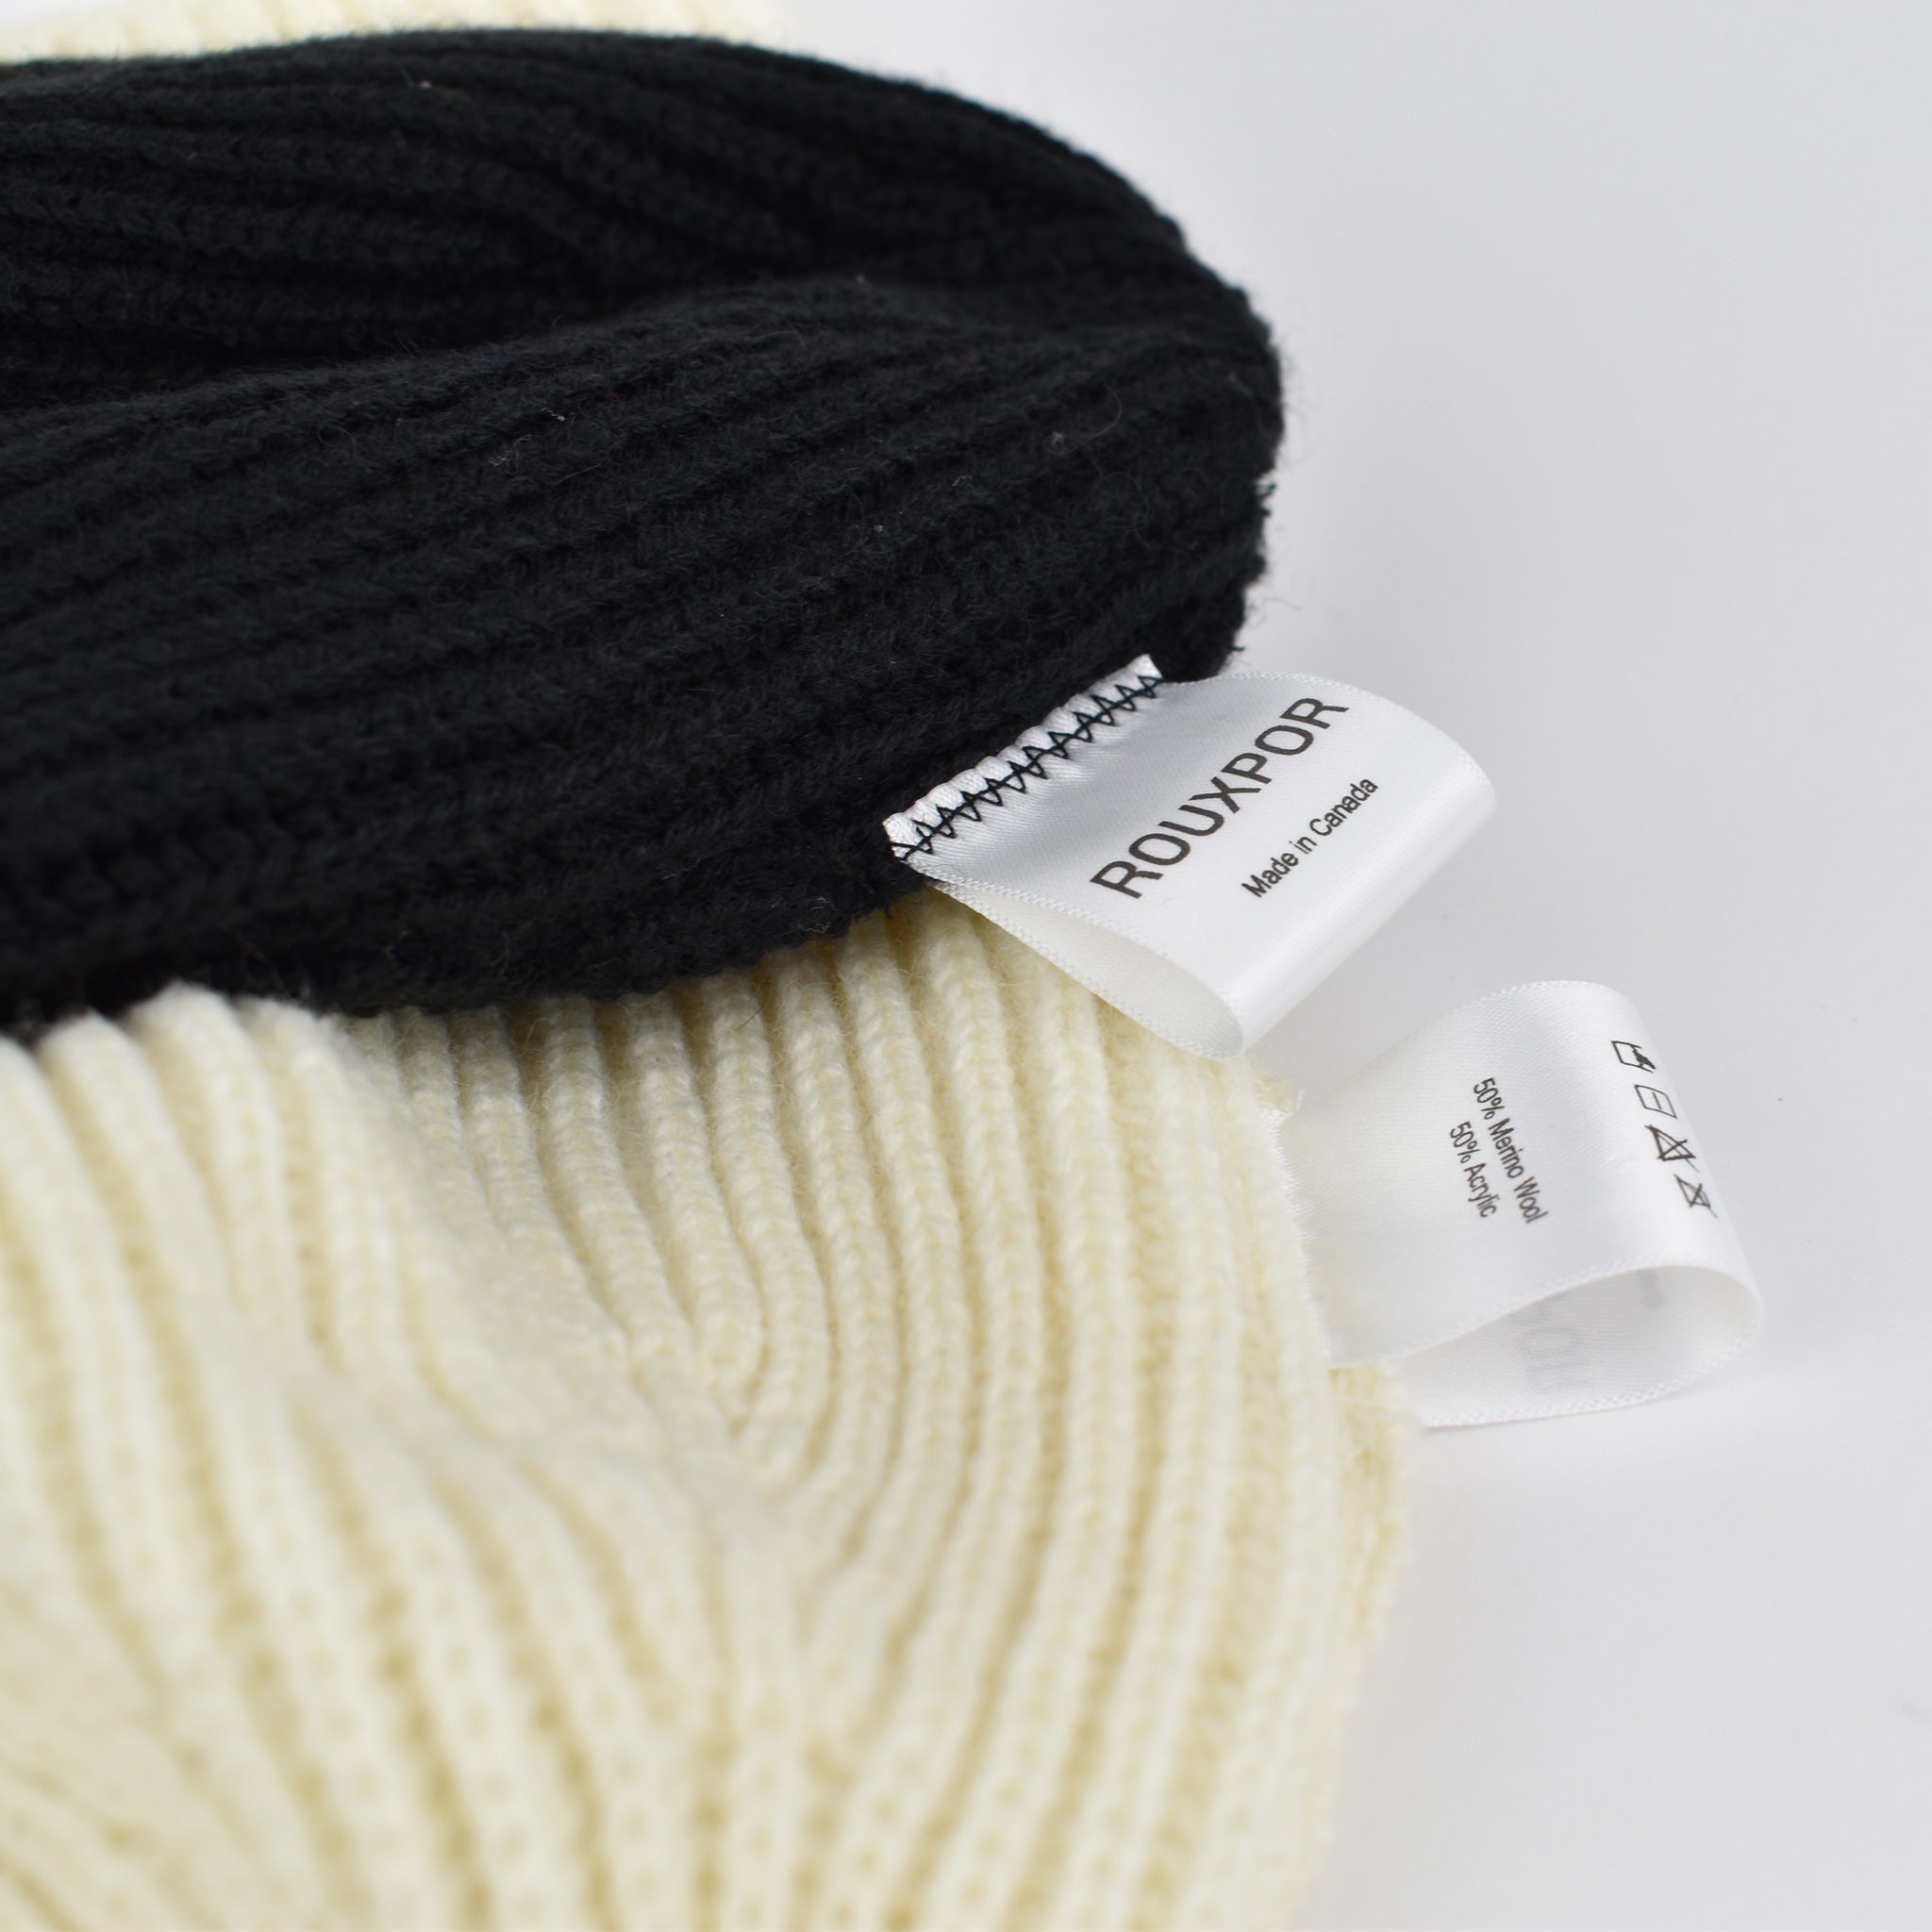 Full Cardigan Knit Beanie w/ Vegan Leather Tag - White